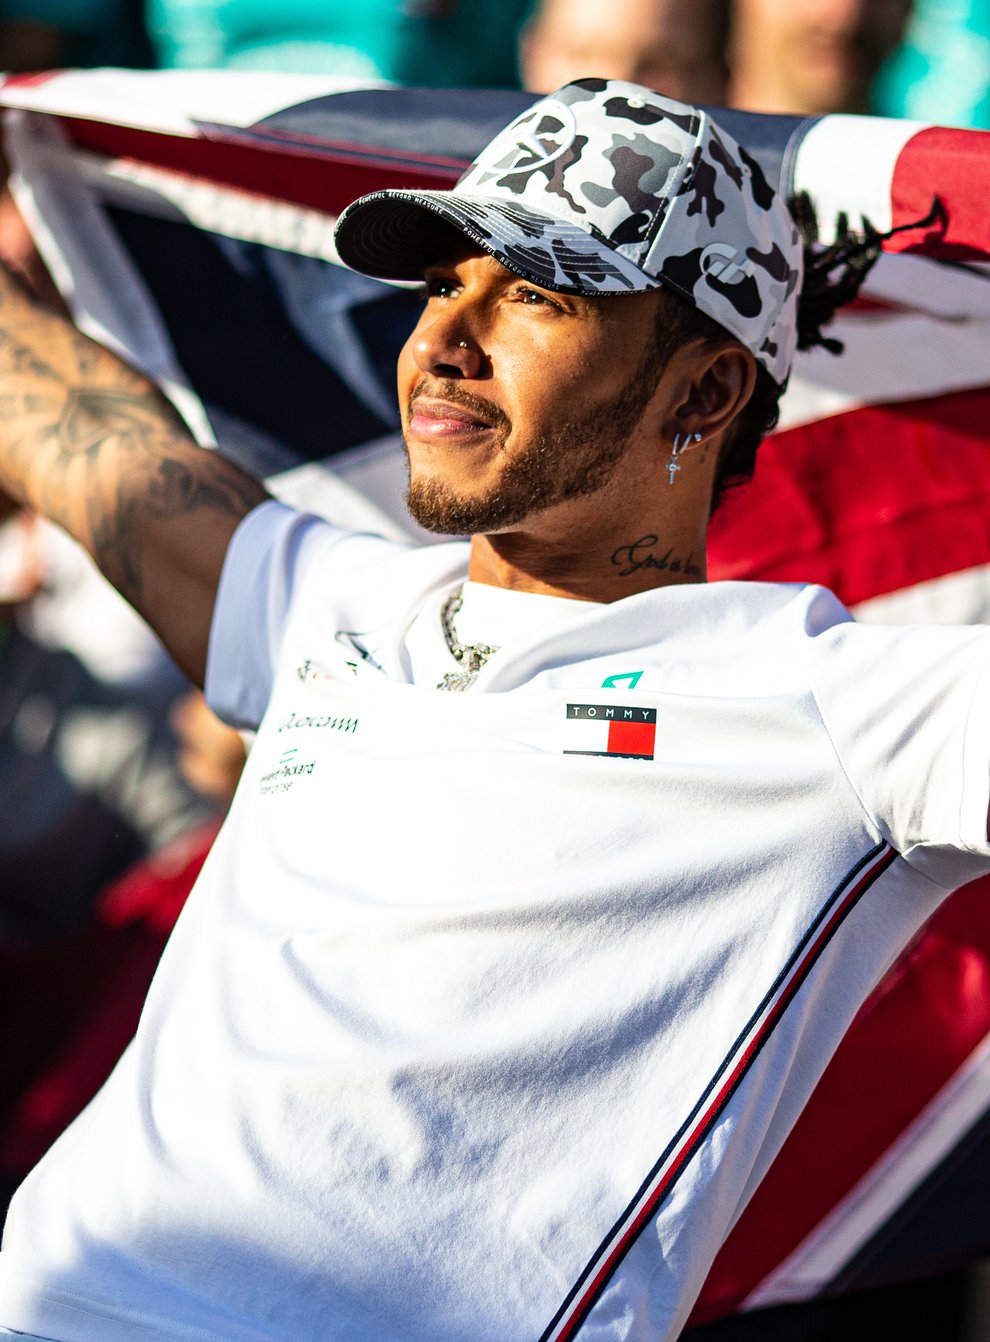 Lewis Hamilton celebrates winning his sixth world championship